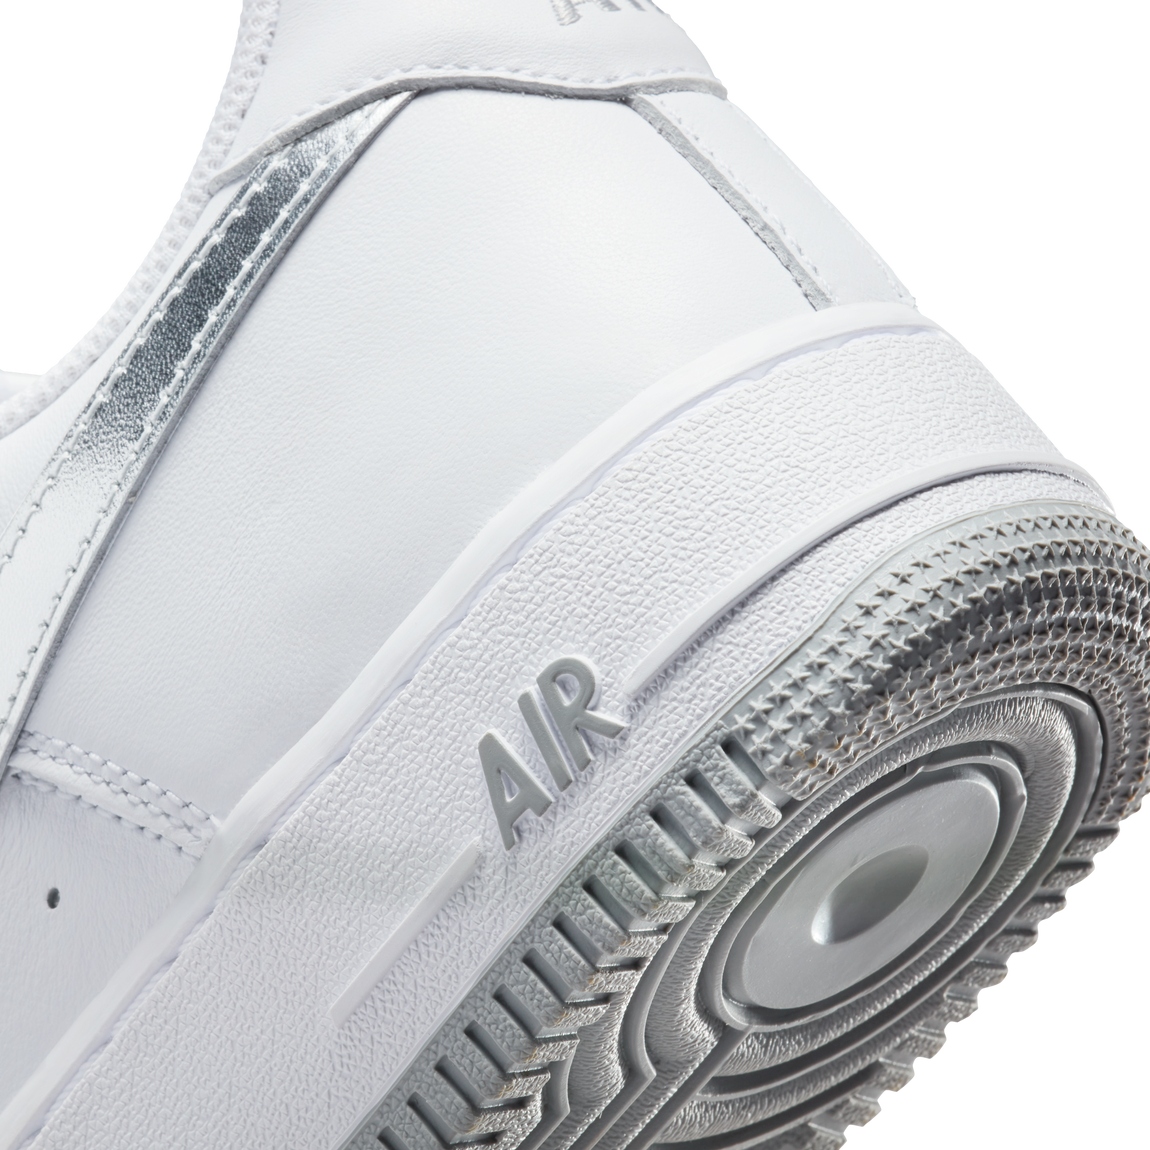 Nike Air Force 1 Low Retro (White/Metallic Silver-Metallic Gold) - Nike Air Force 1 Low Retro (White/Metallic Silver-Metallic Gold) - 